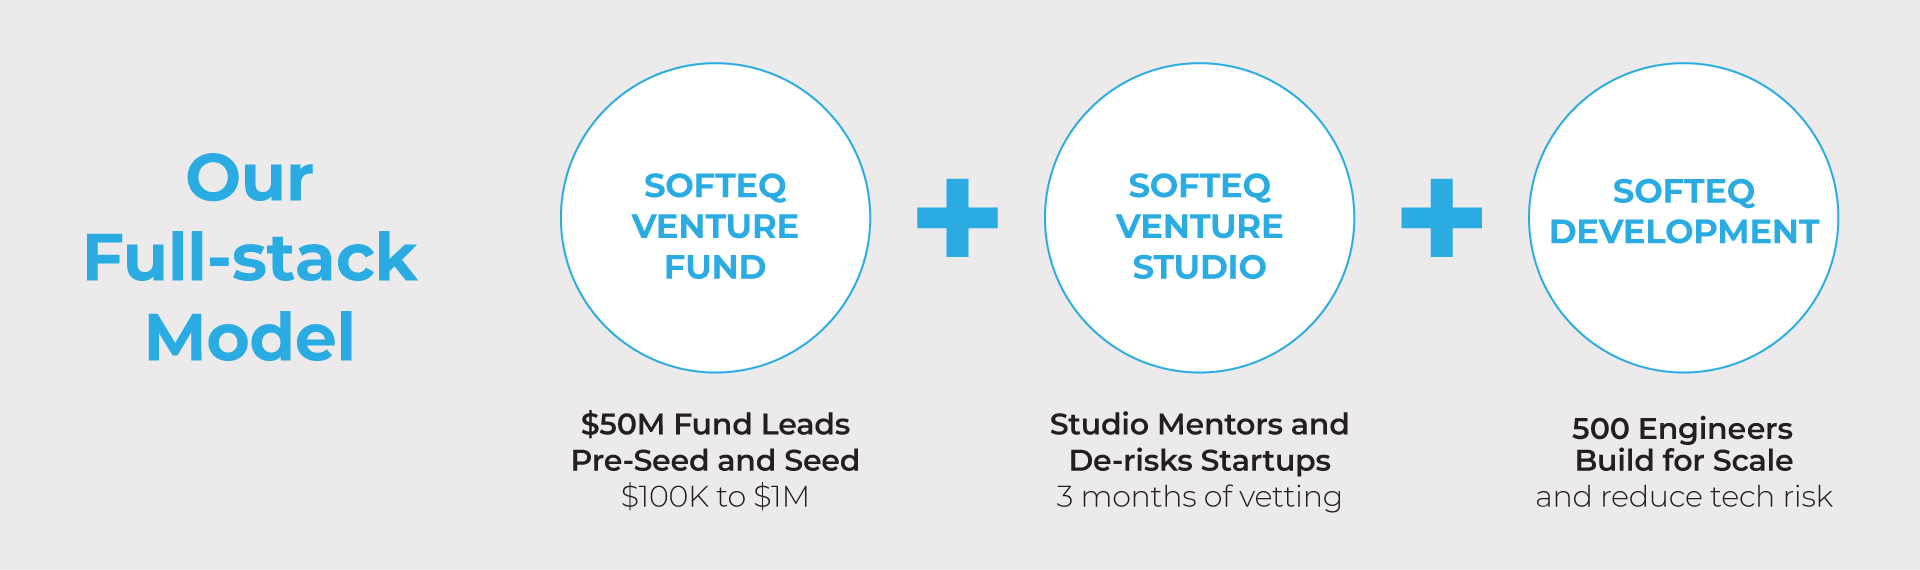 Softeq Venture Studio business model-1